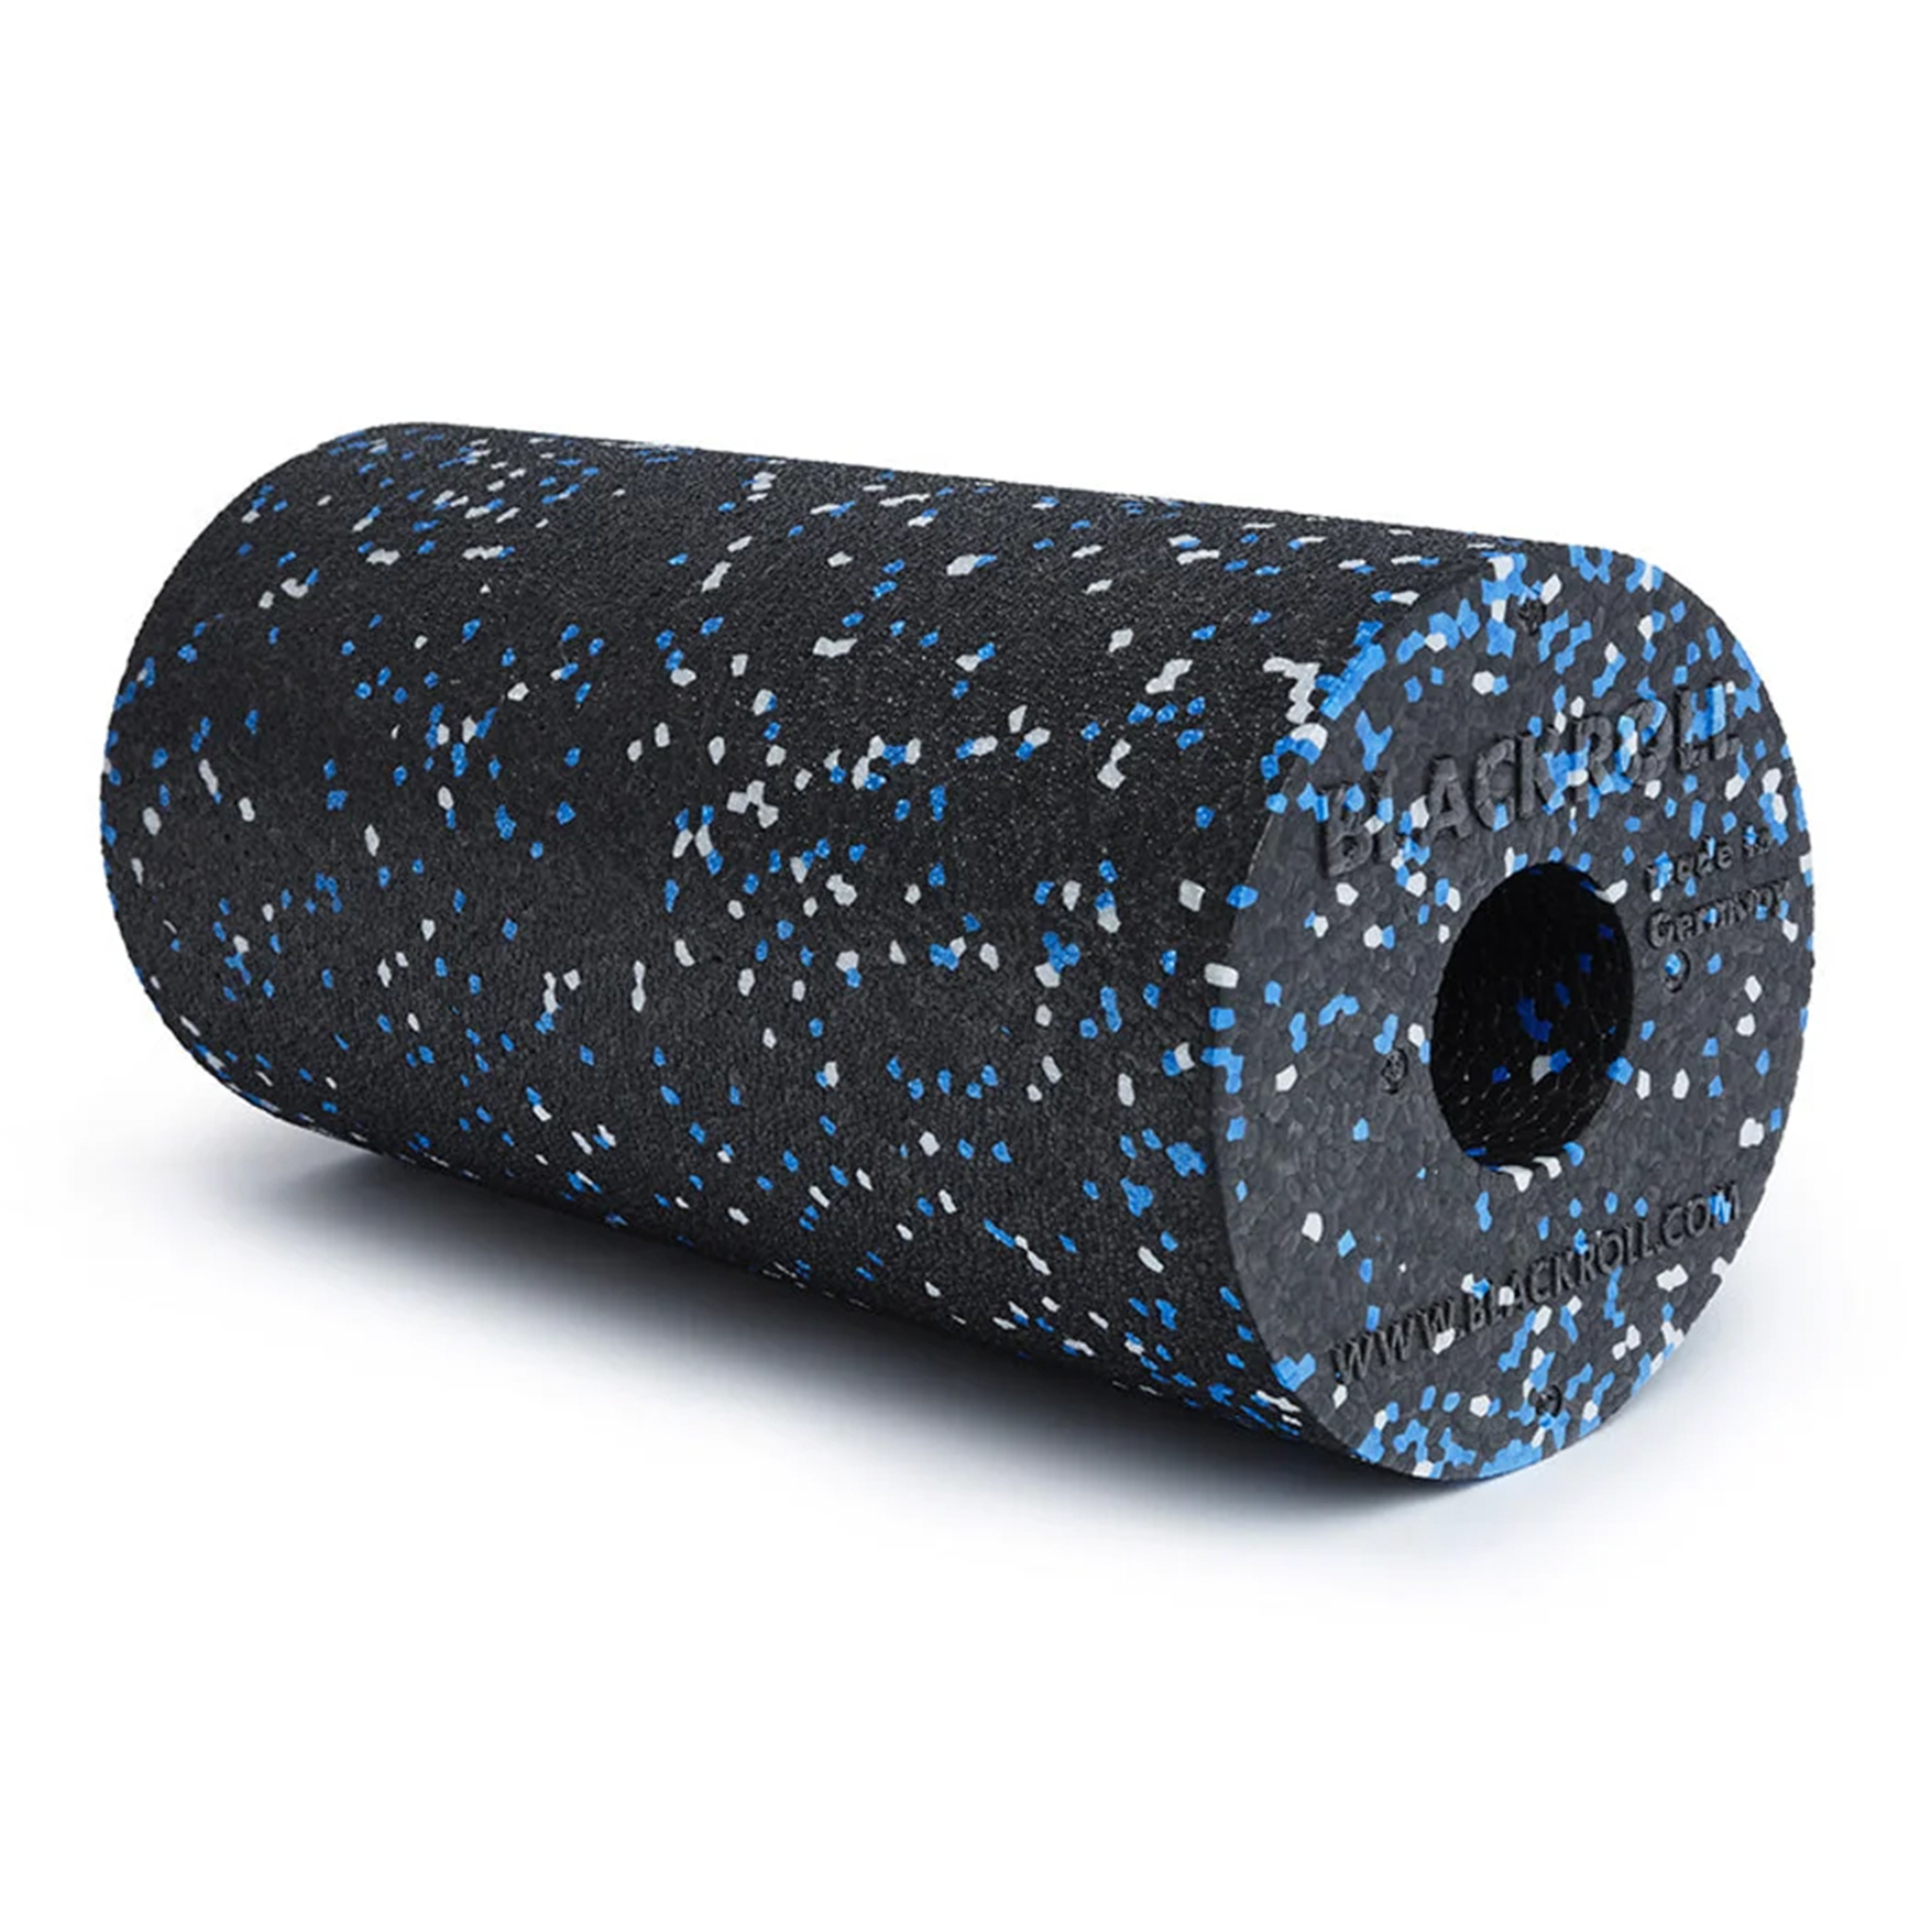 Blackroll Standard Foam Roller - Sort/hvid/blå - 30 x 15 cm thumbnail